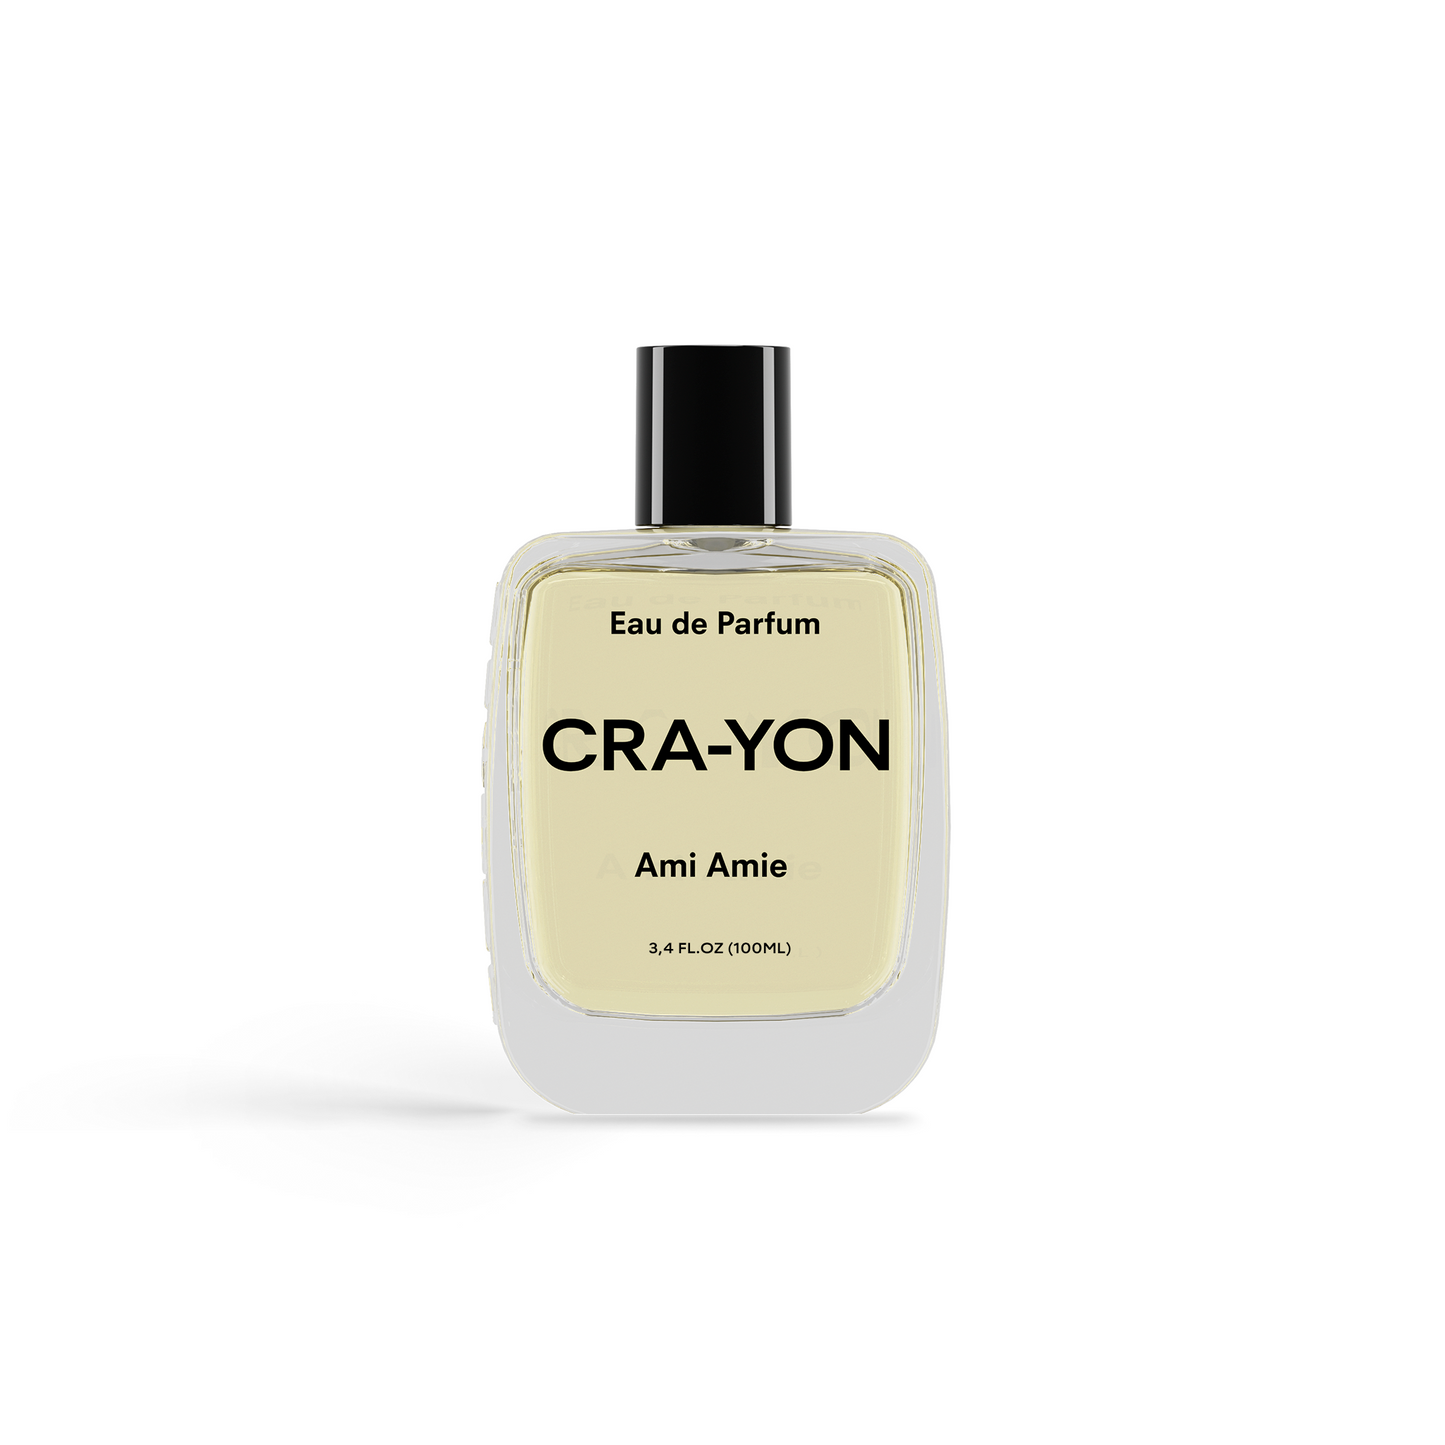 Ami Amie 100ml Eau de Parfum by CRA-YON. Notes of Chocolate, Plum, Black currant and Raspberry. -image